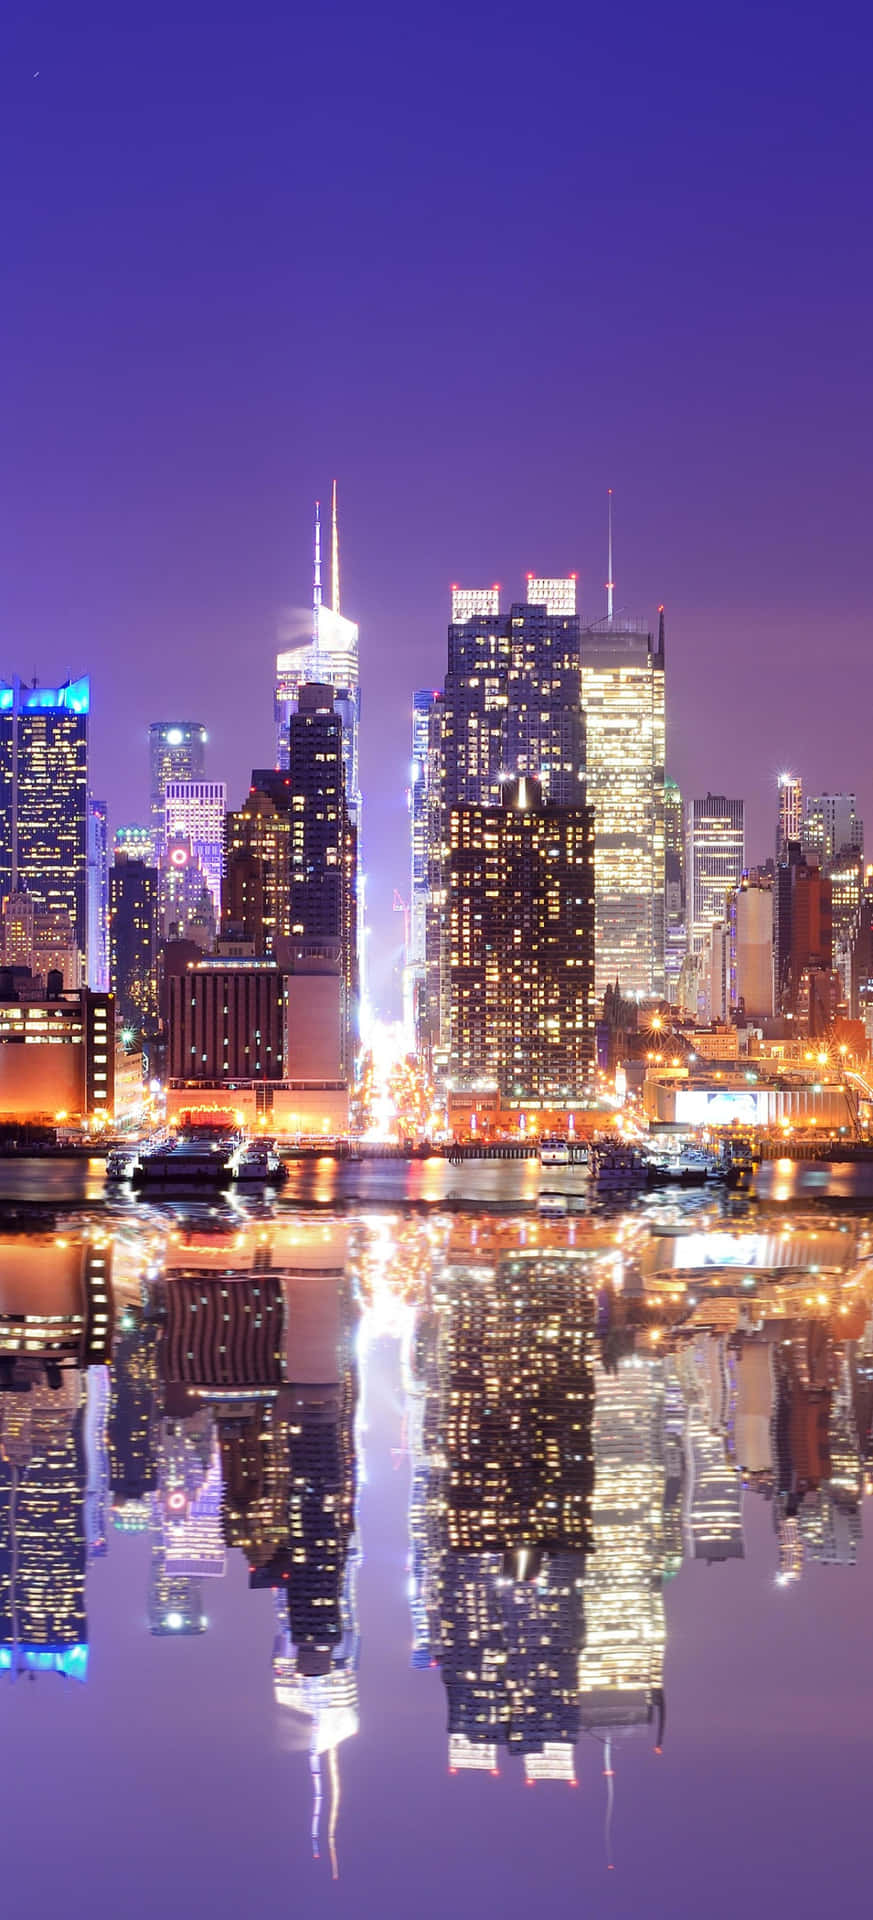 New York City Night Reflection Iphone Wallpaper